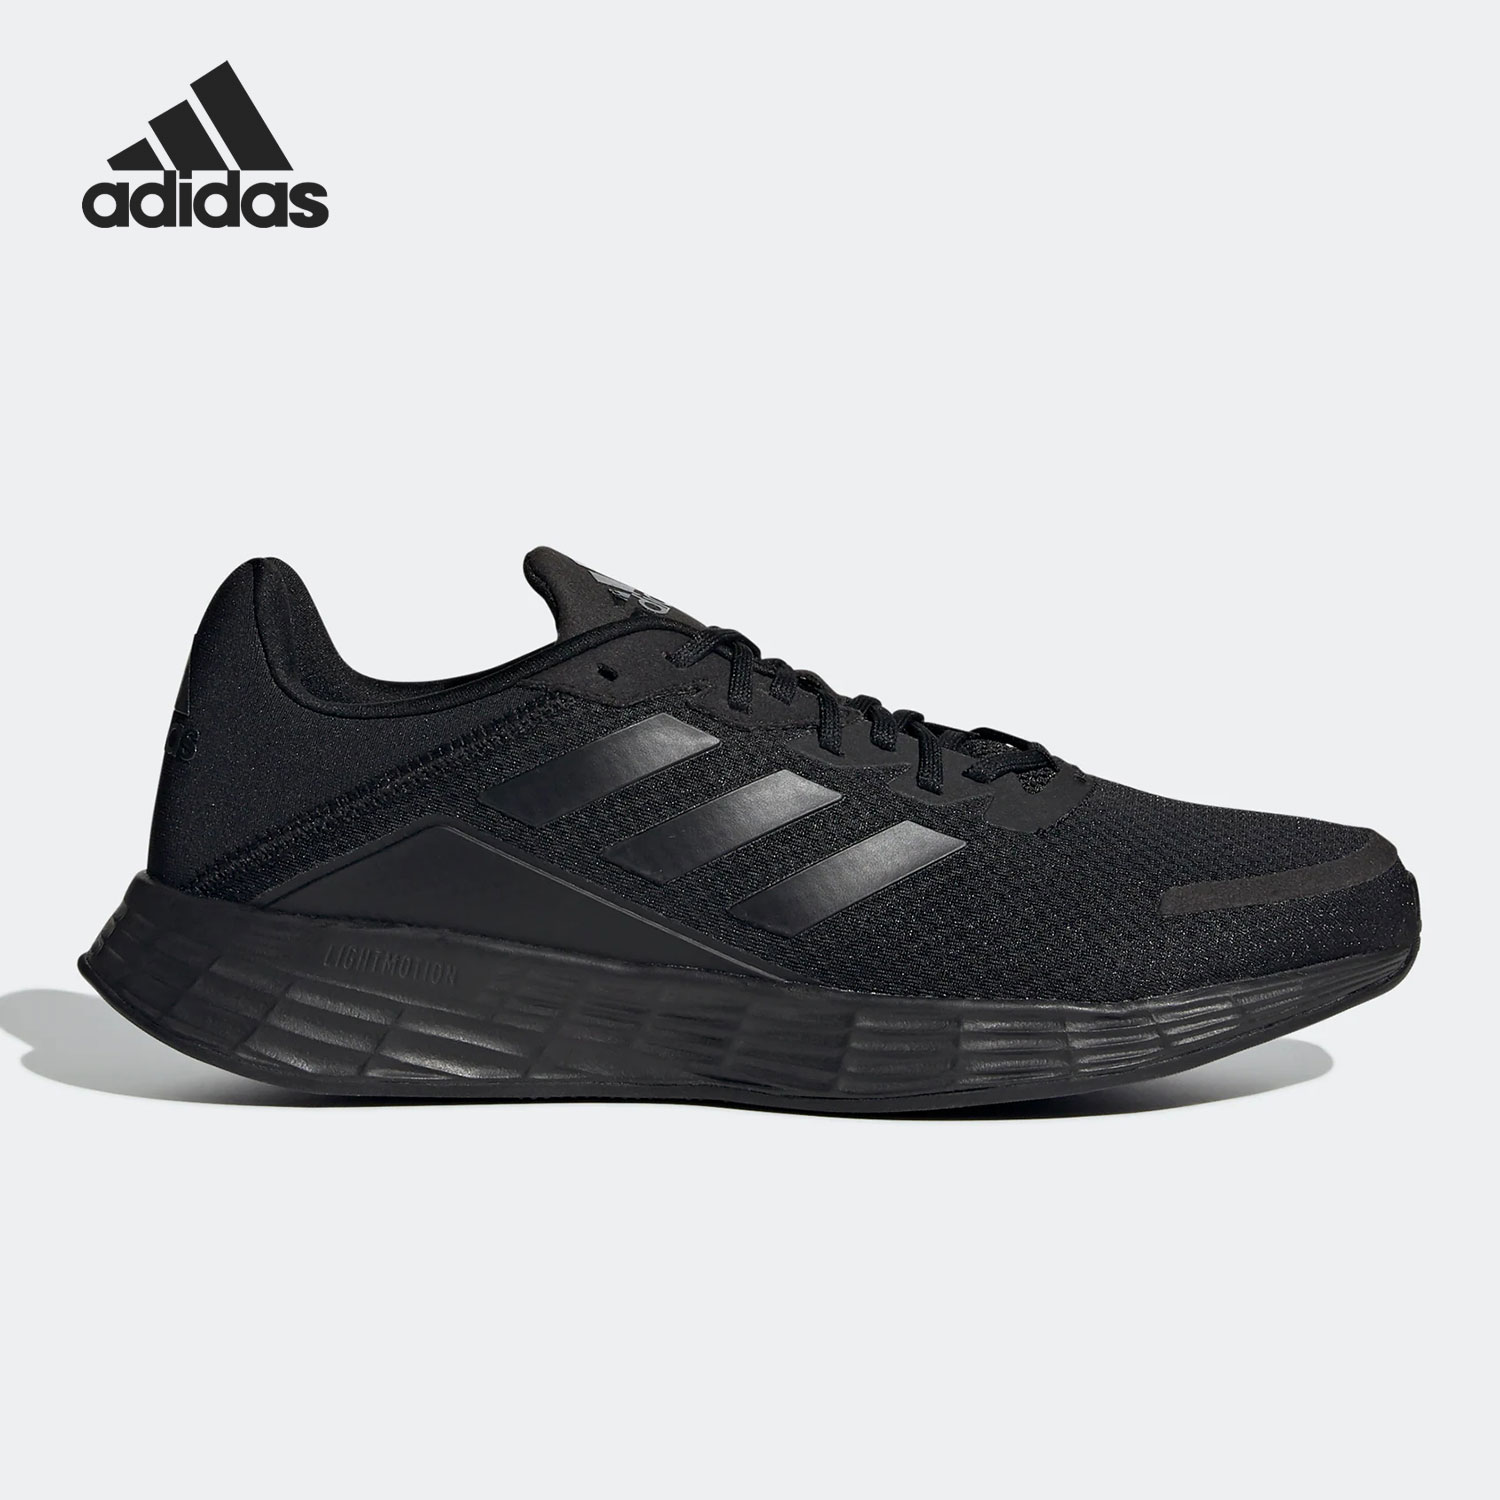 Adidas/阿迪达斯正品DURAMO SL男子竞速轻盈疾速跑步鞋G58108 运动鞋new 跑步鞋 原图主图